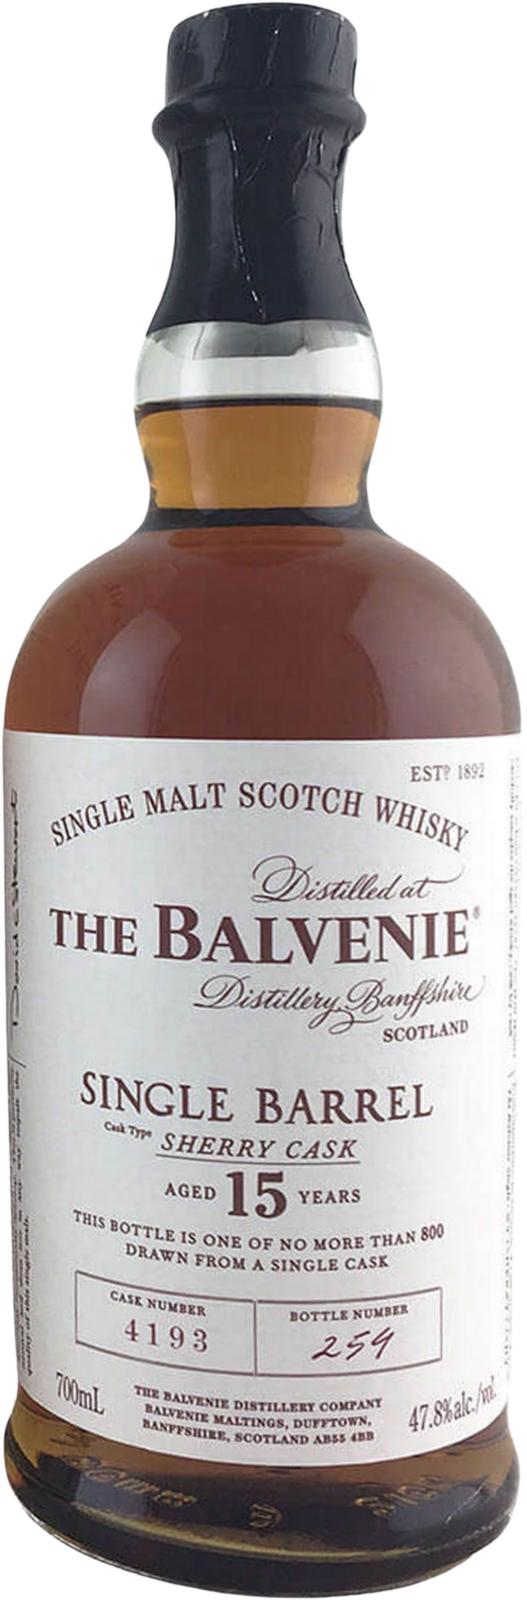 Balvenie 15yo Single Barrel Sherry Cask #4193 47.8% 700ml